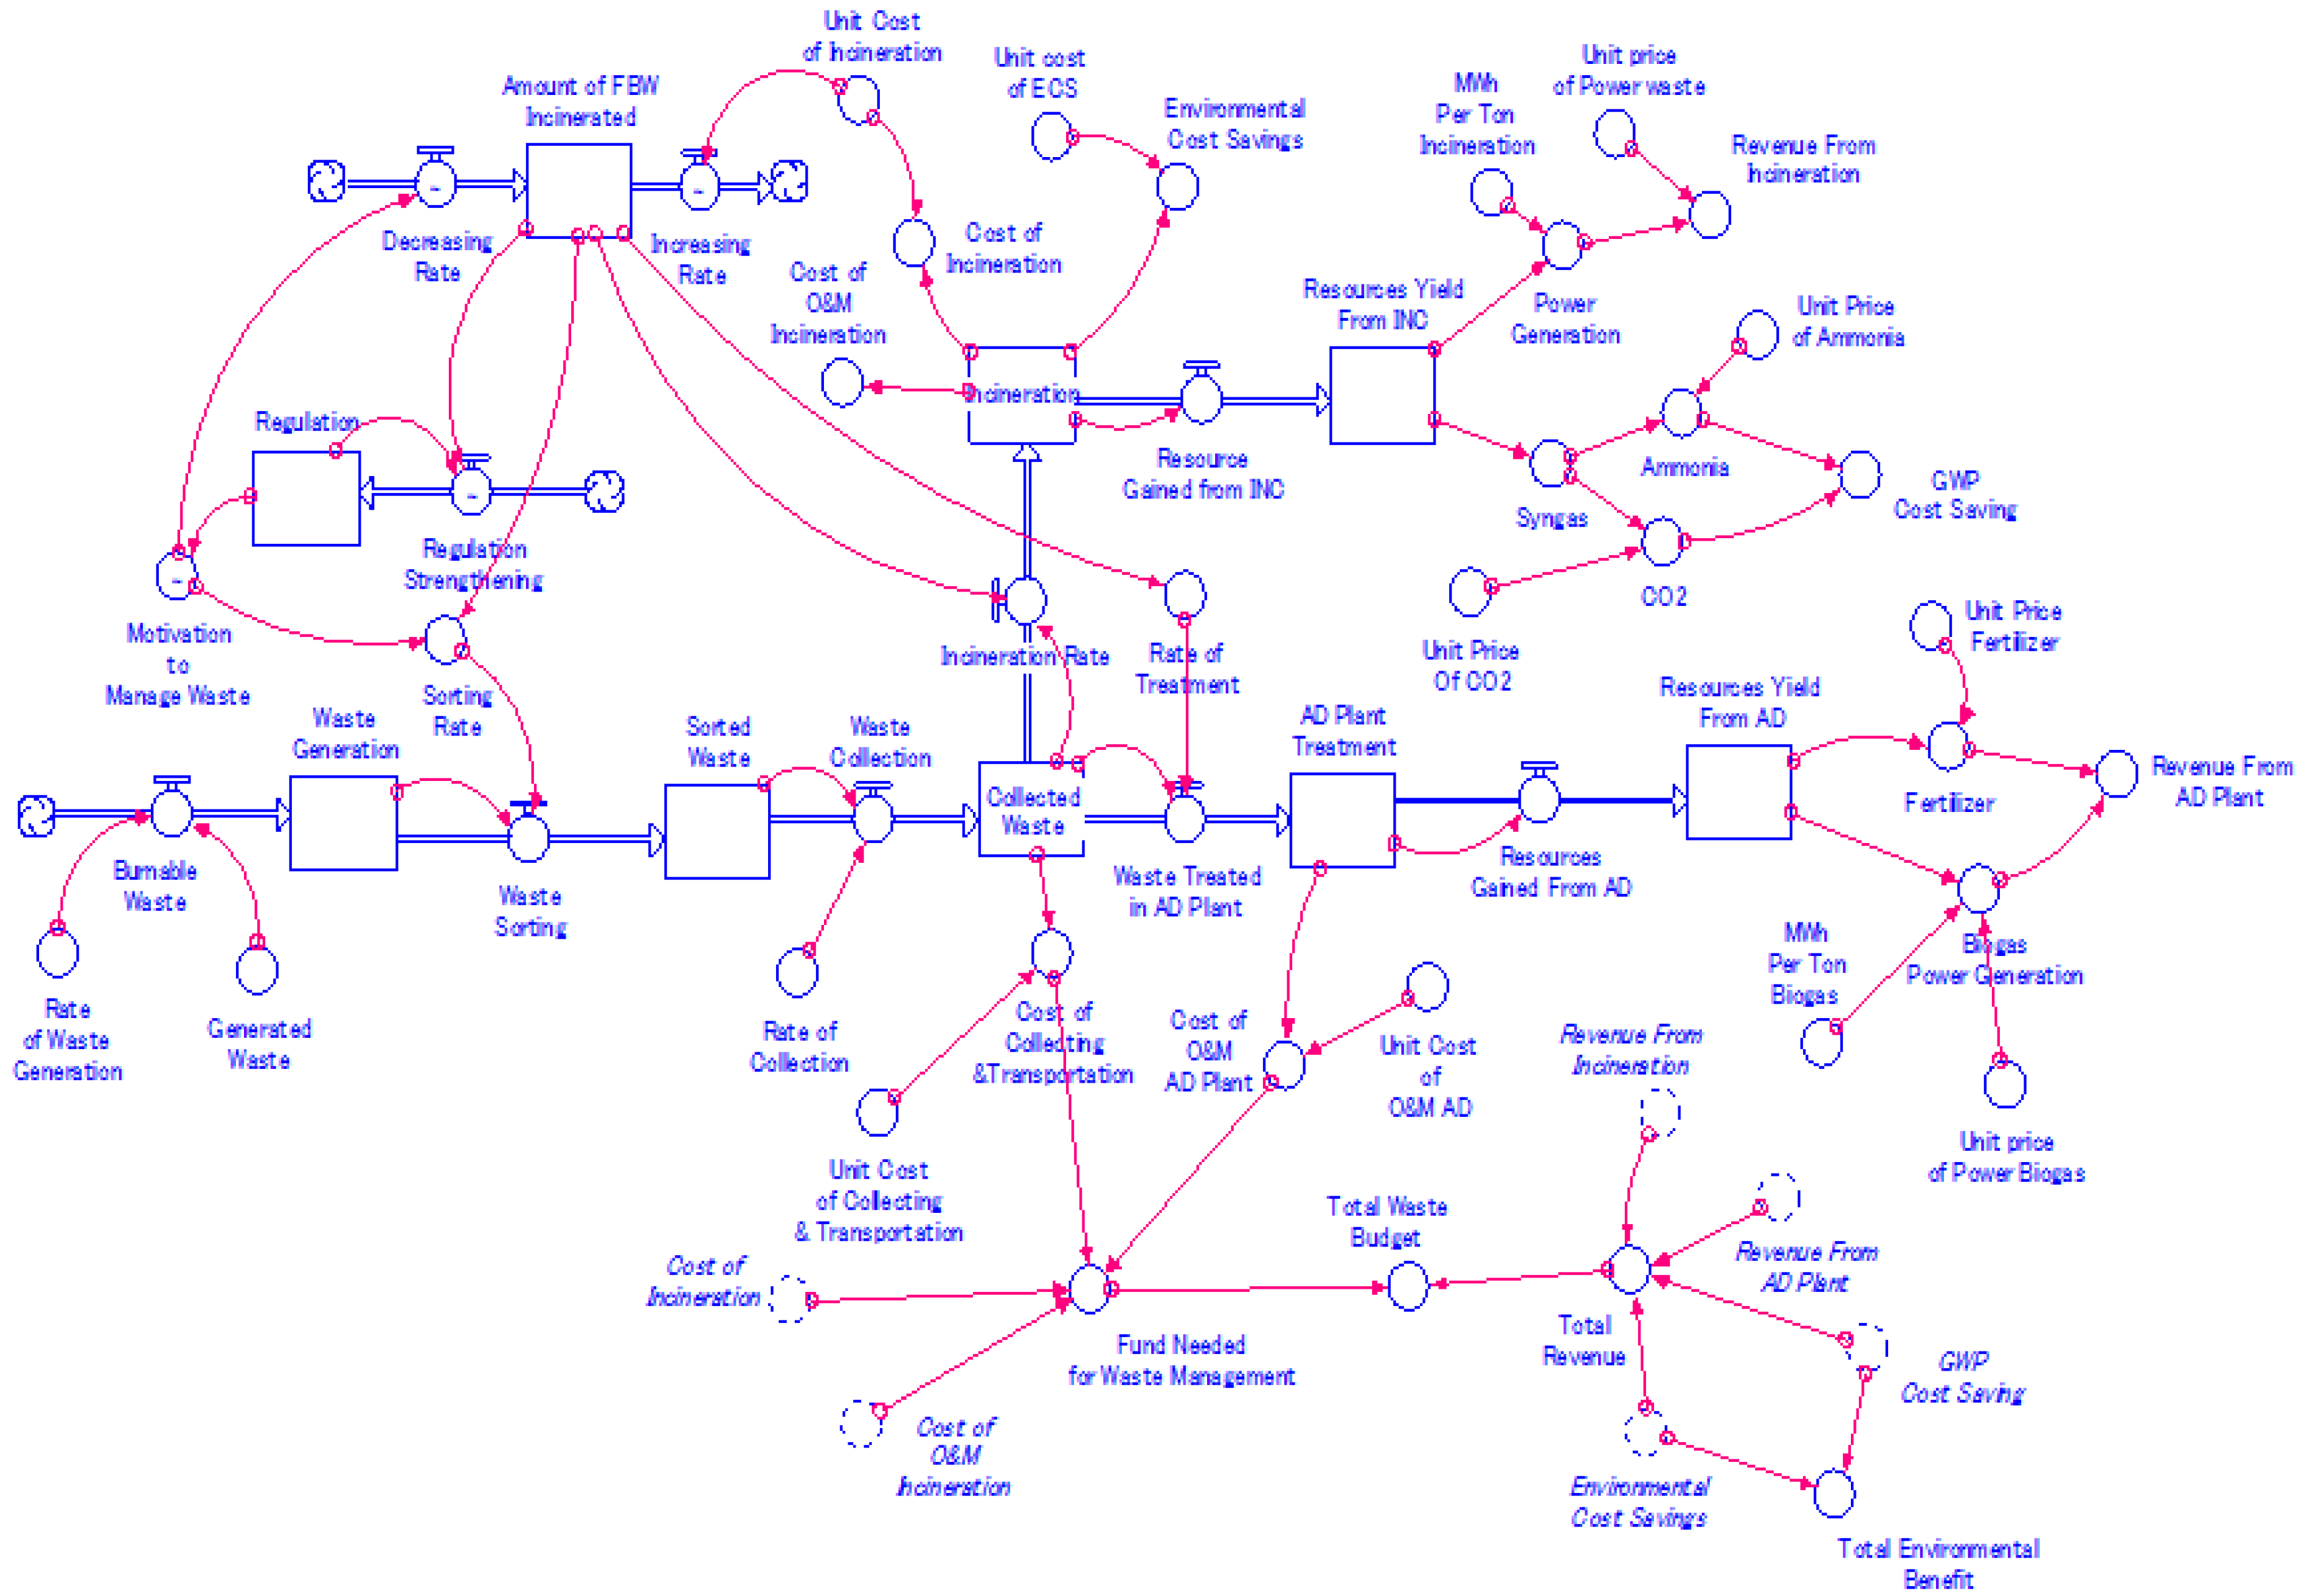 causal loop diagram stella architect